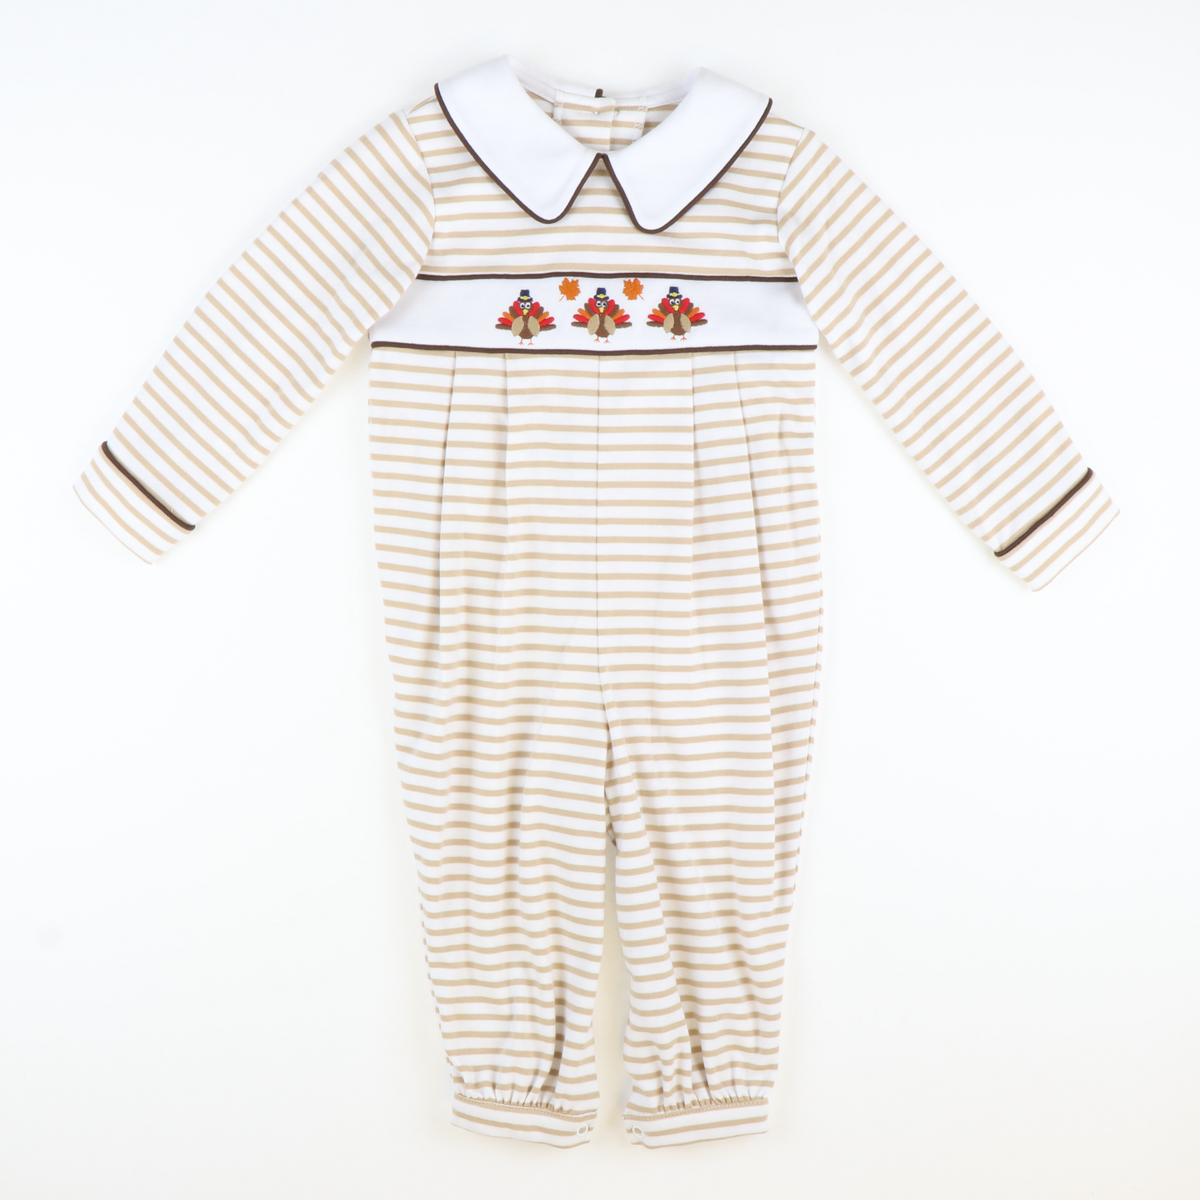 Embroidered Turkeys Collared Boy Long Bubble - Tan Stripe Knit